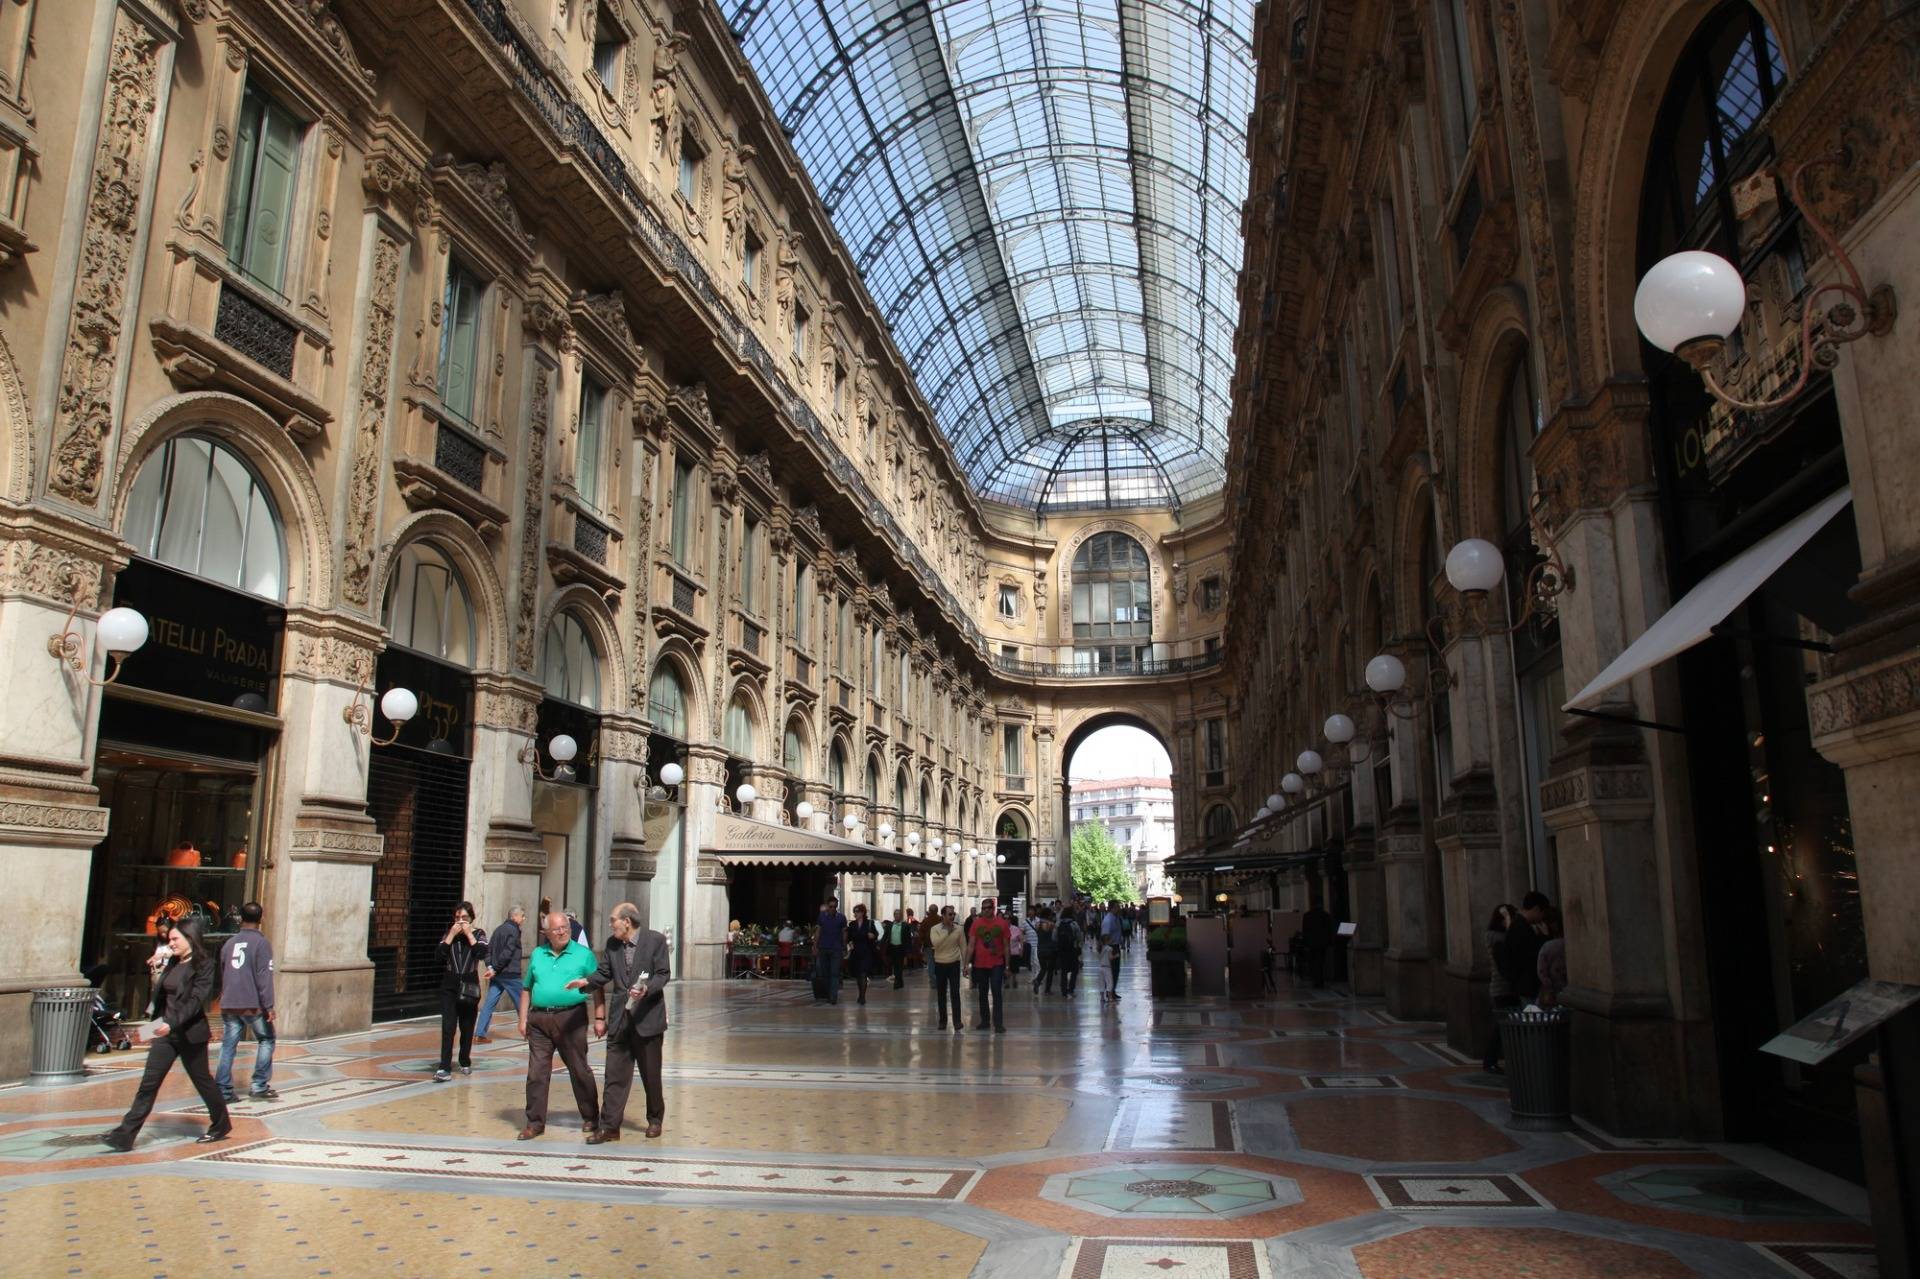 The indoor shopping gallery ofVitorio Emanuel II